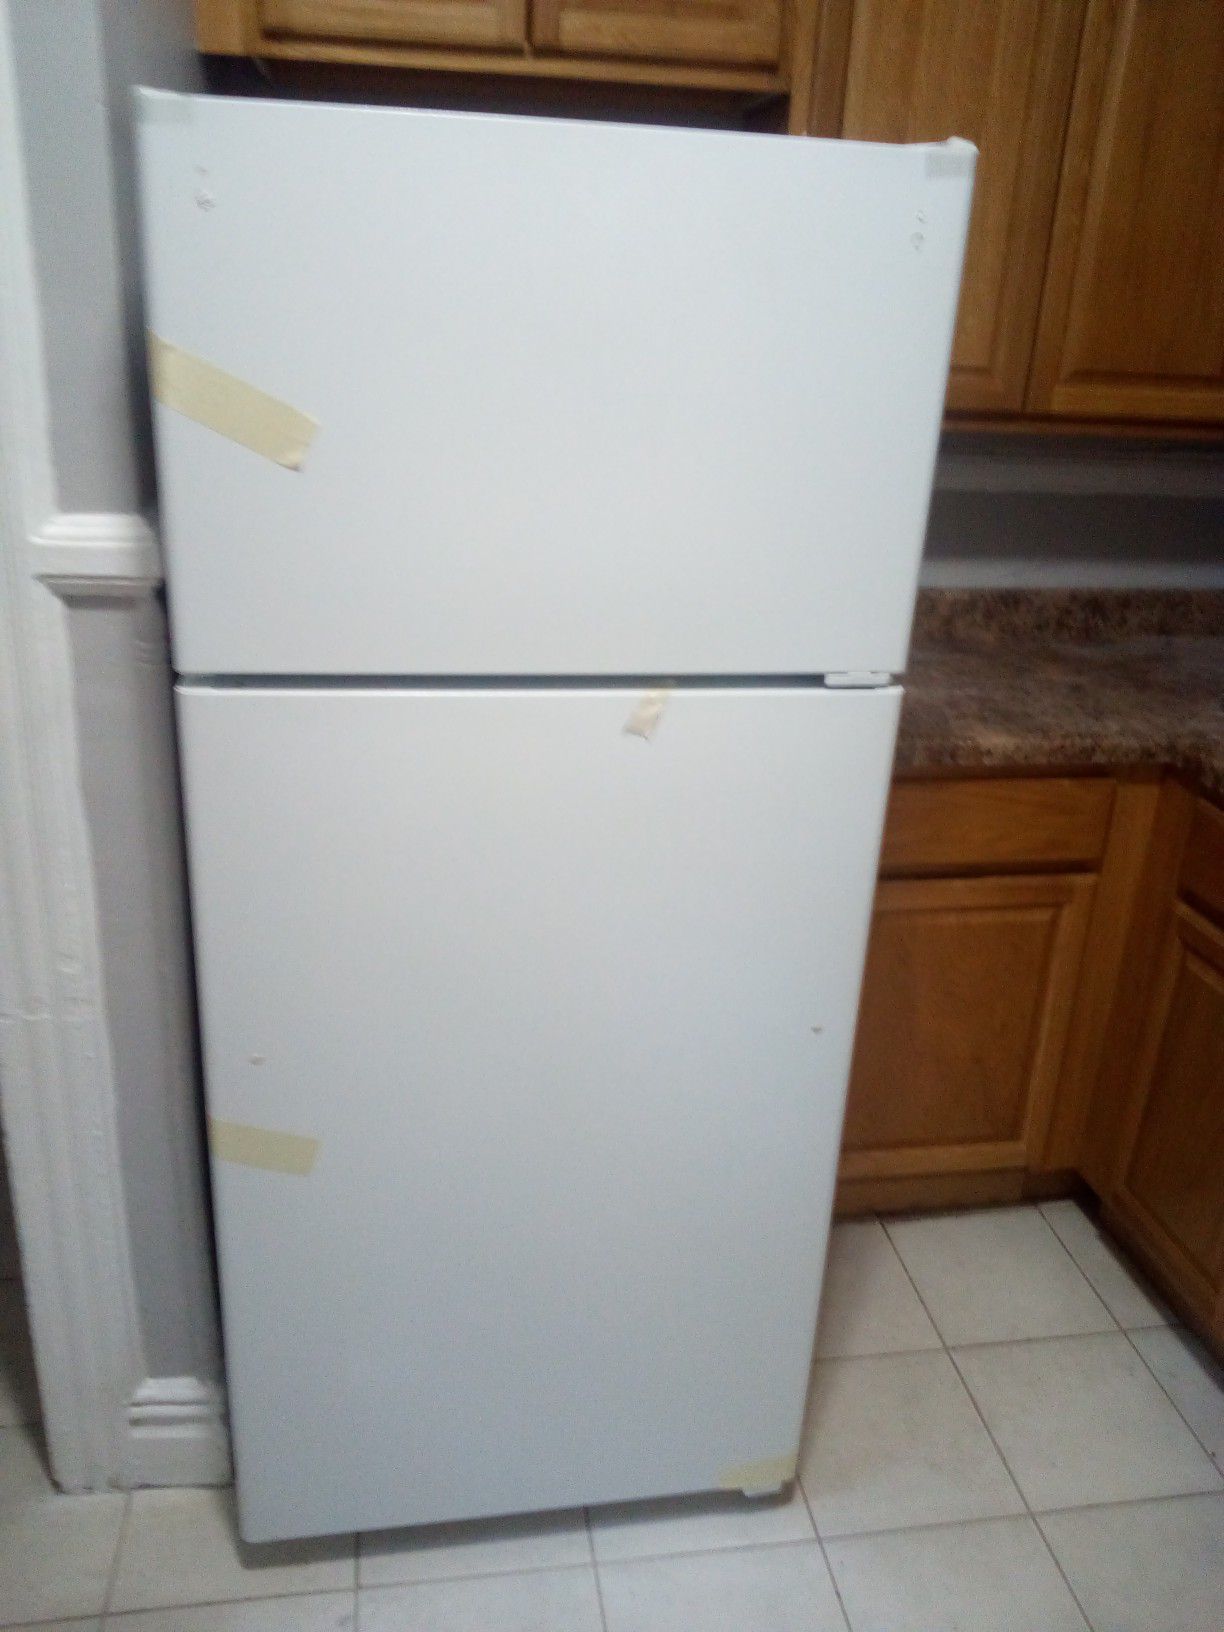 Brand new white refrigerator